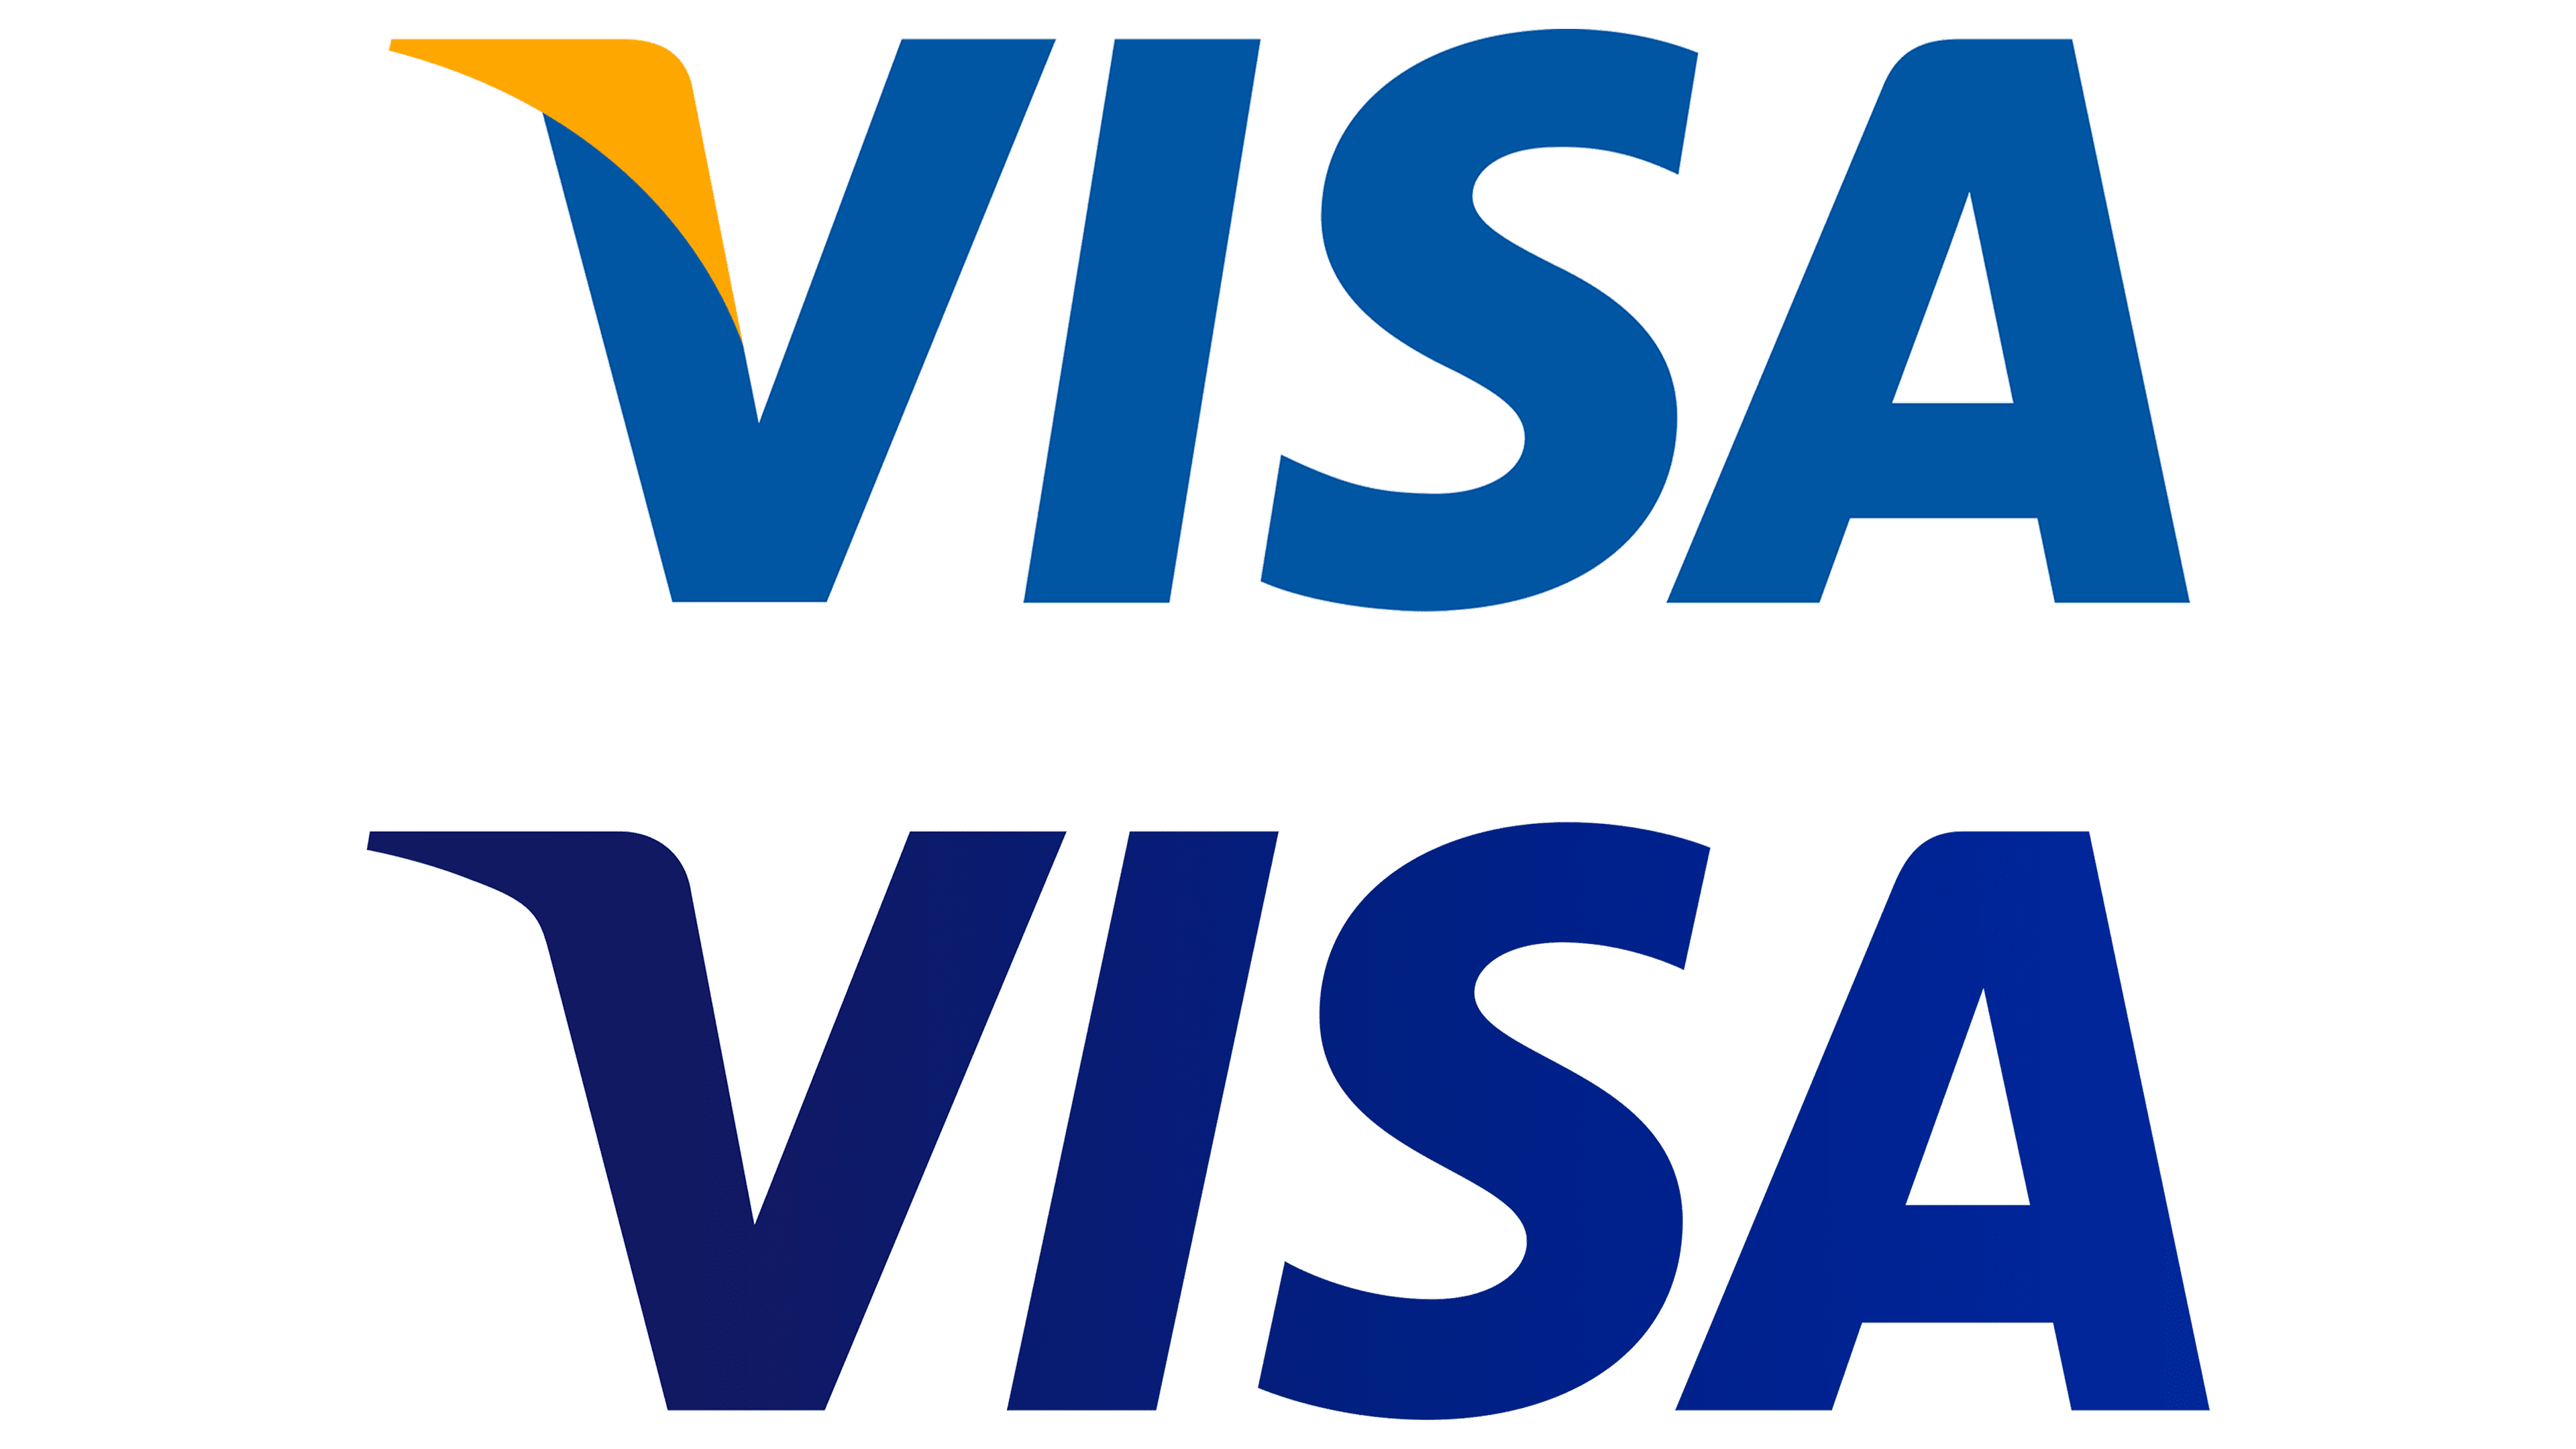 Ni visa. Логотип виза. Cisa логотип. Visa. Visa новый логотип.